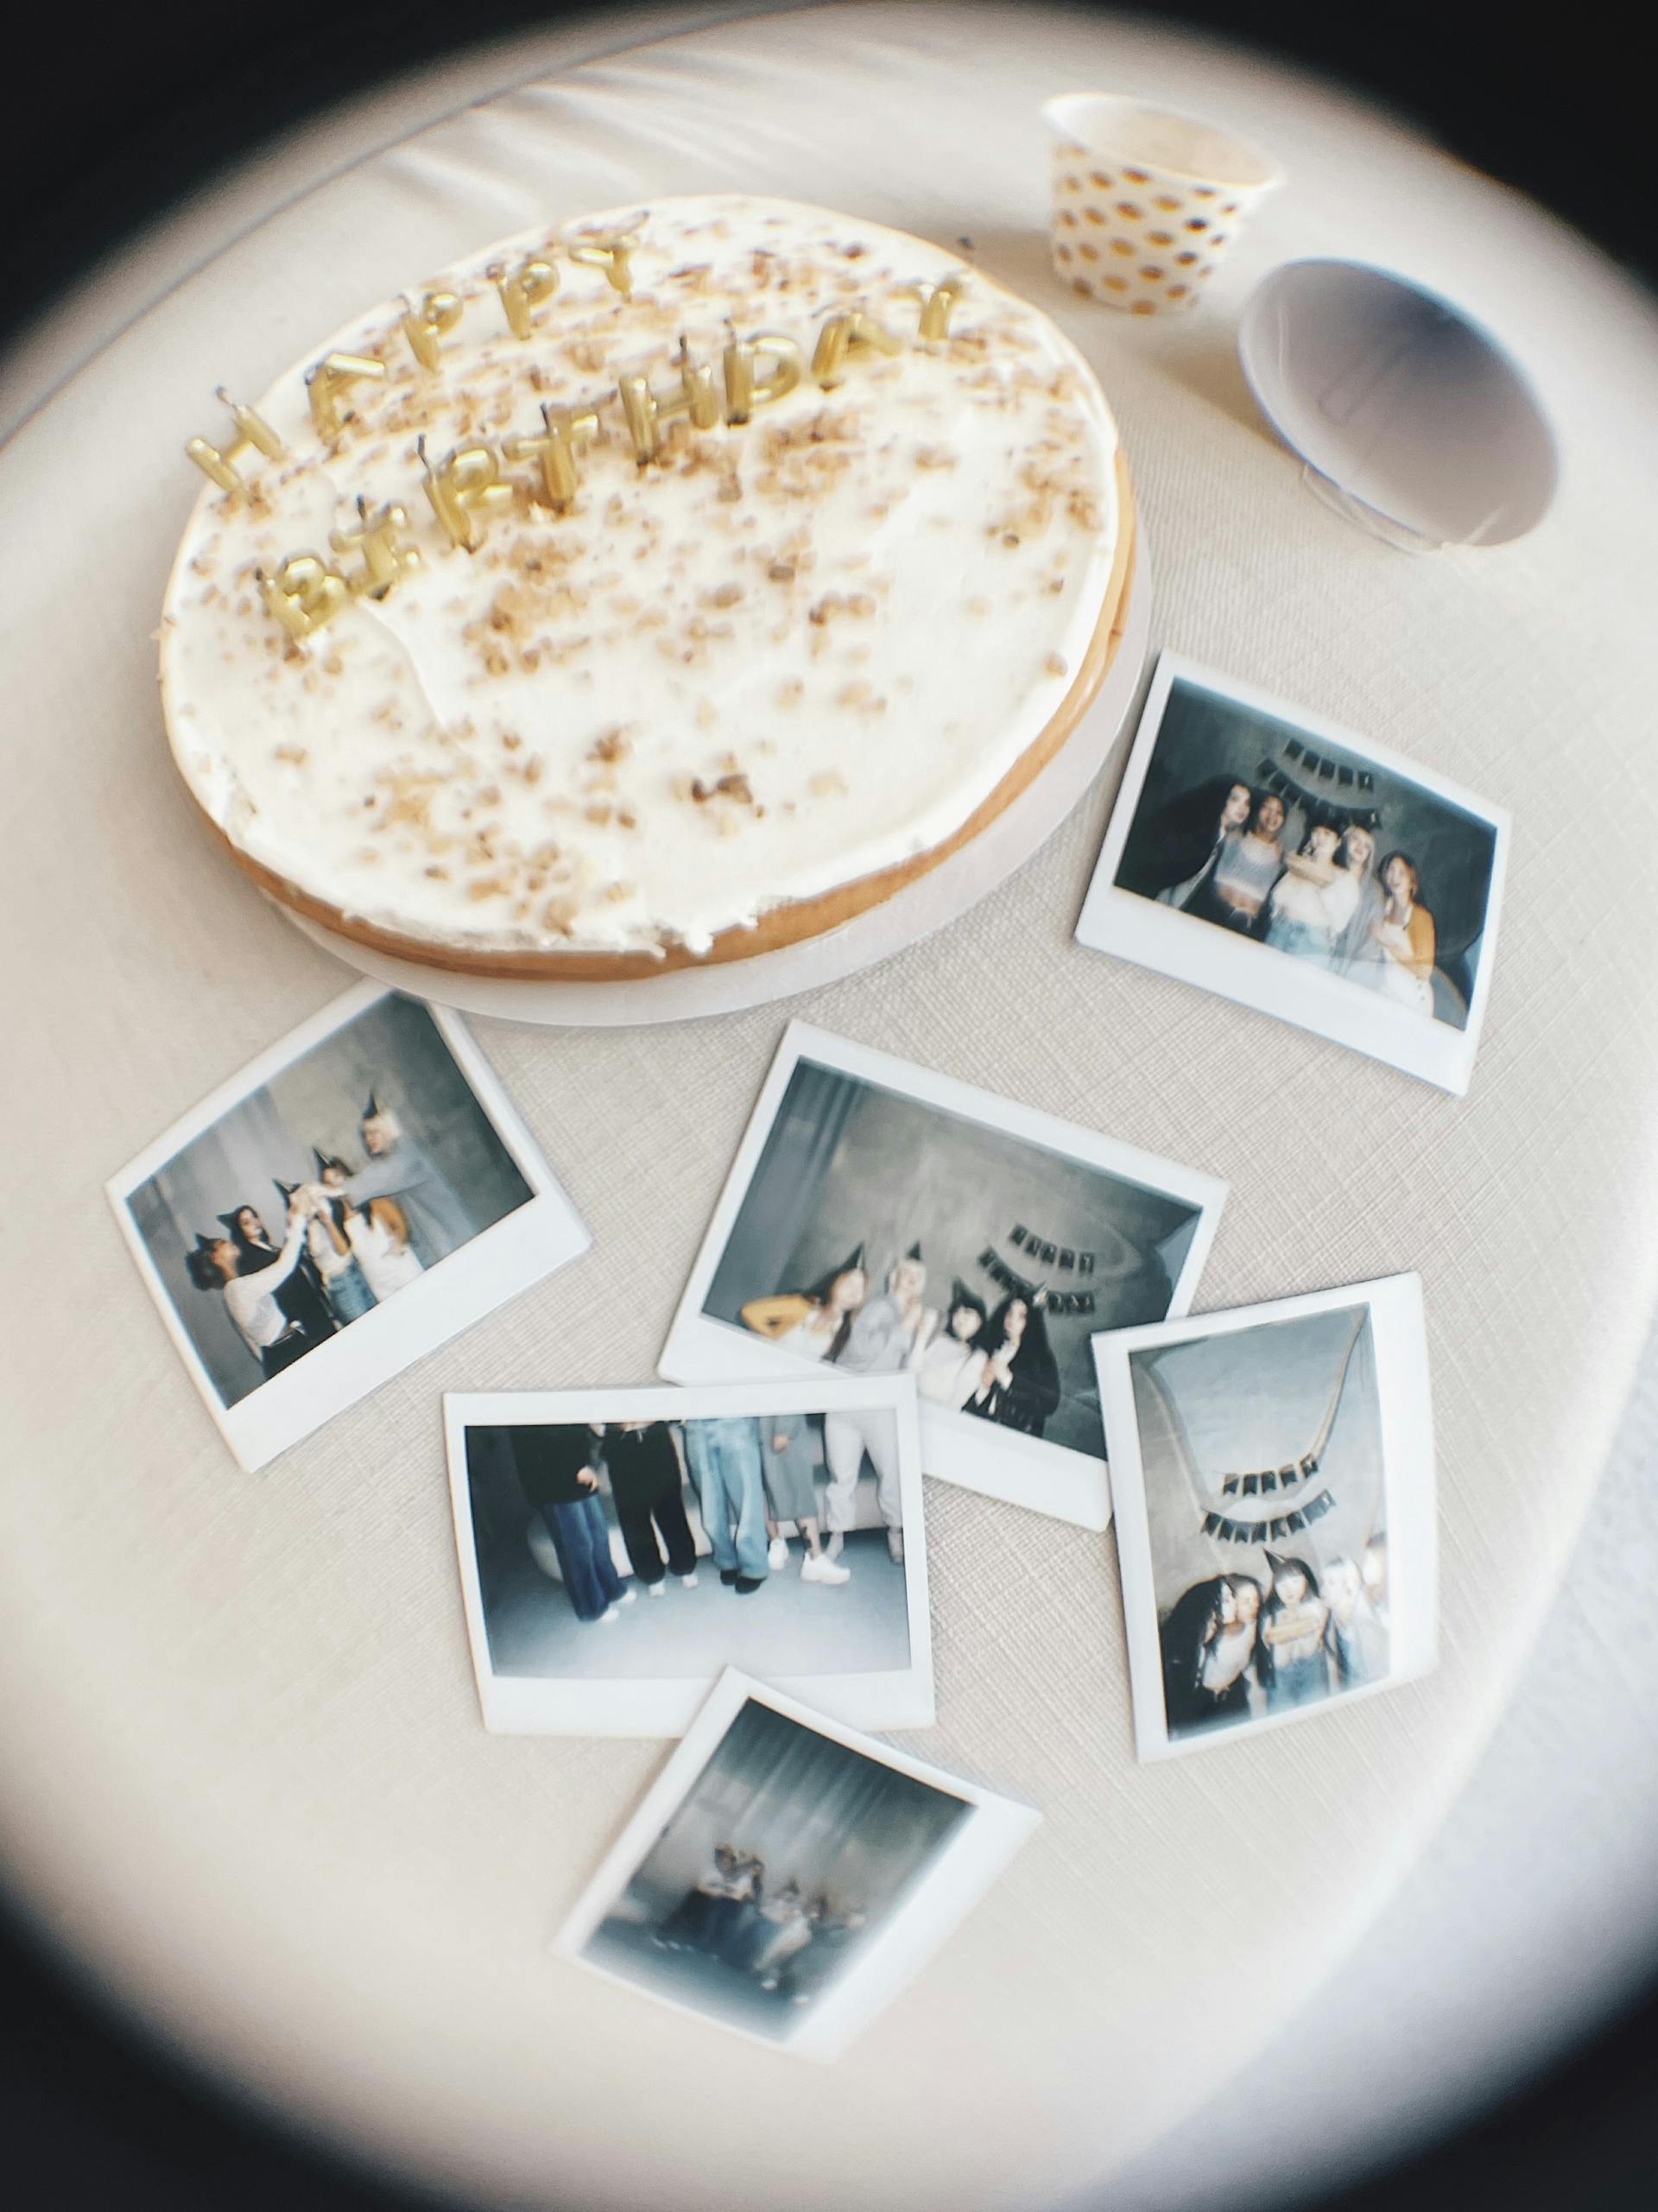 Photographs lying beside a birthday cake | Source: Pexels